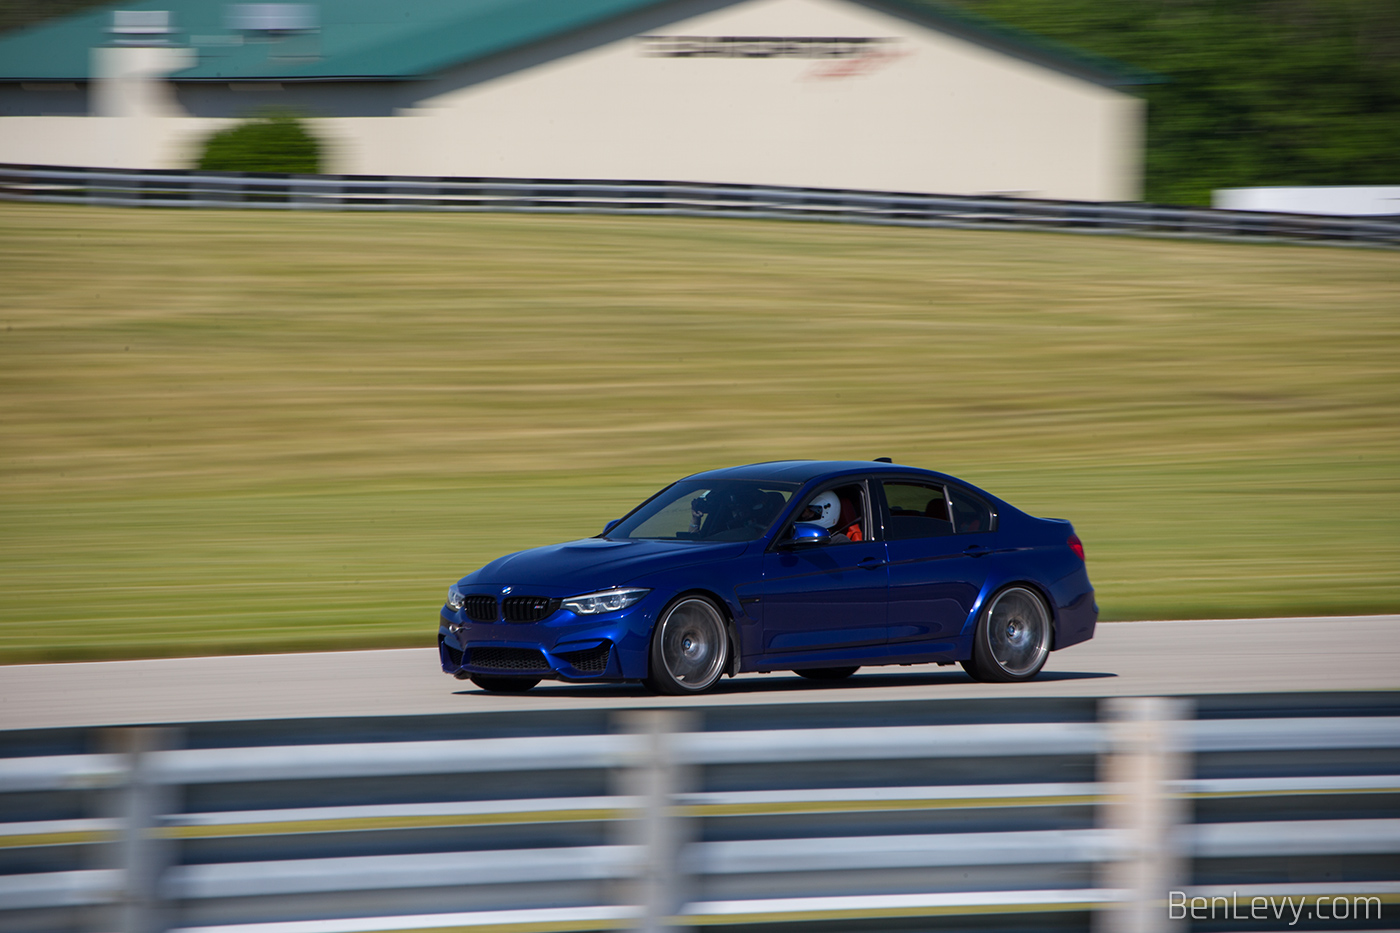 San Marino Blue Metallic BMW M3 at Autobahn Country Club